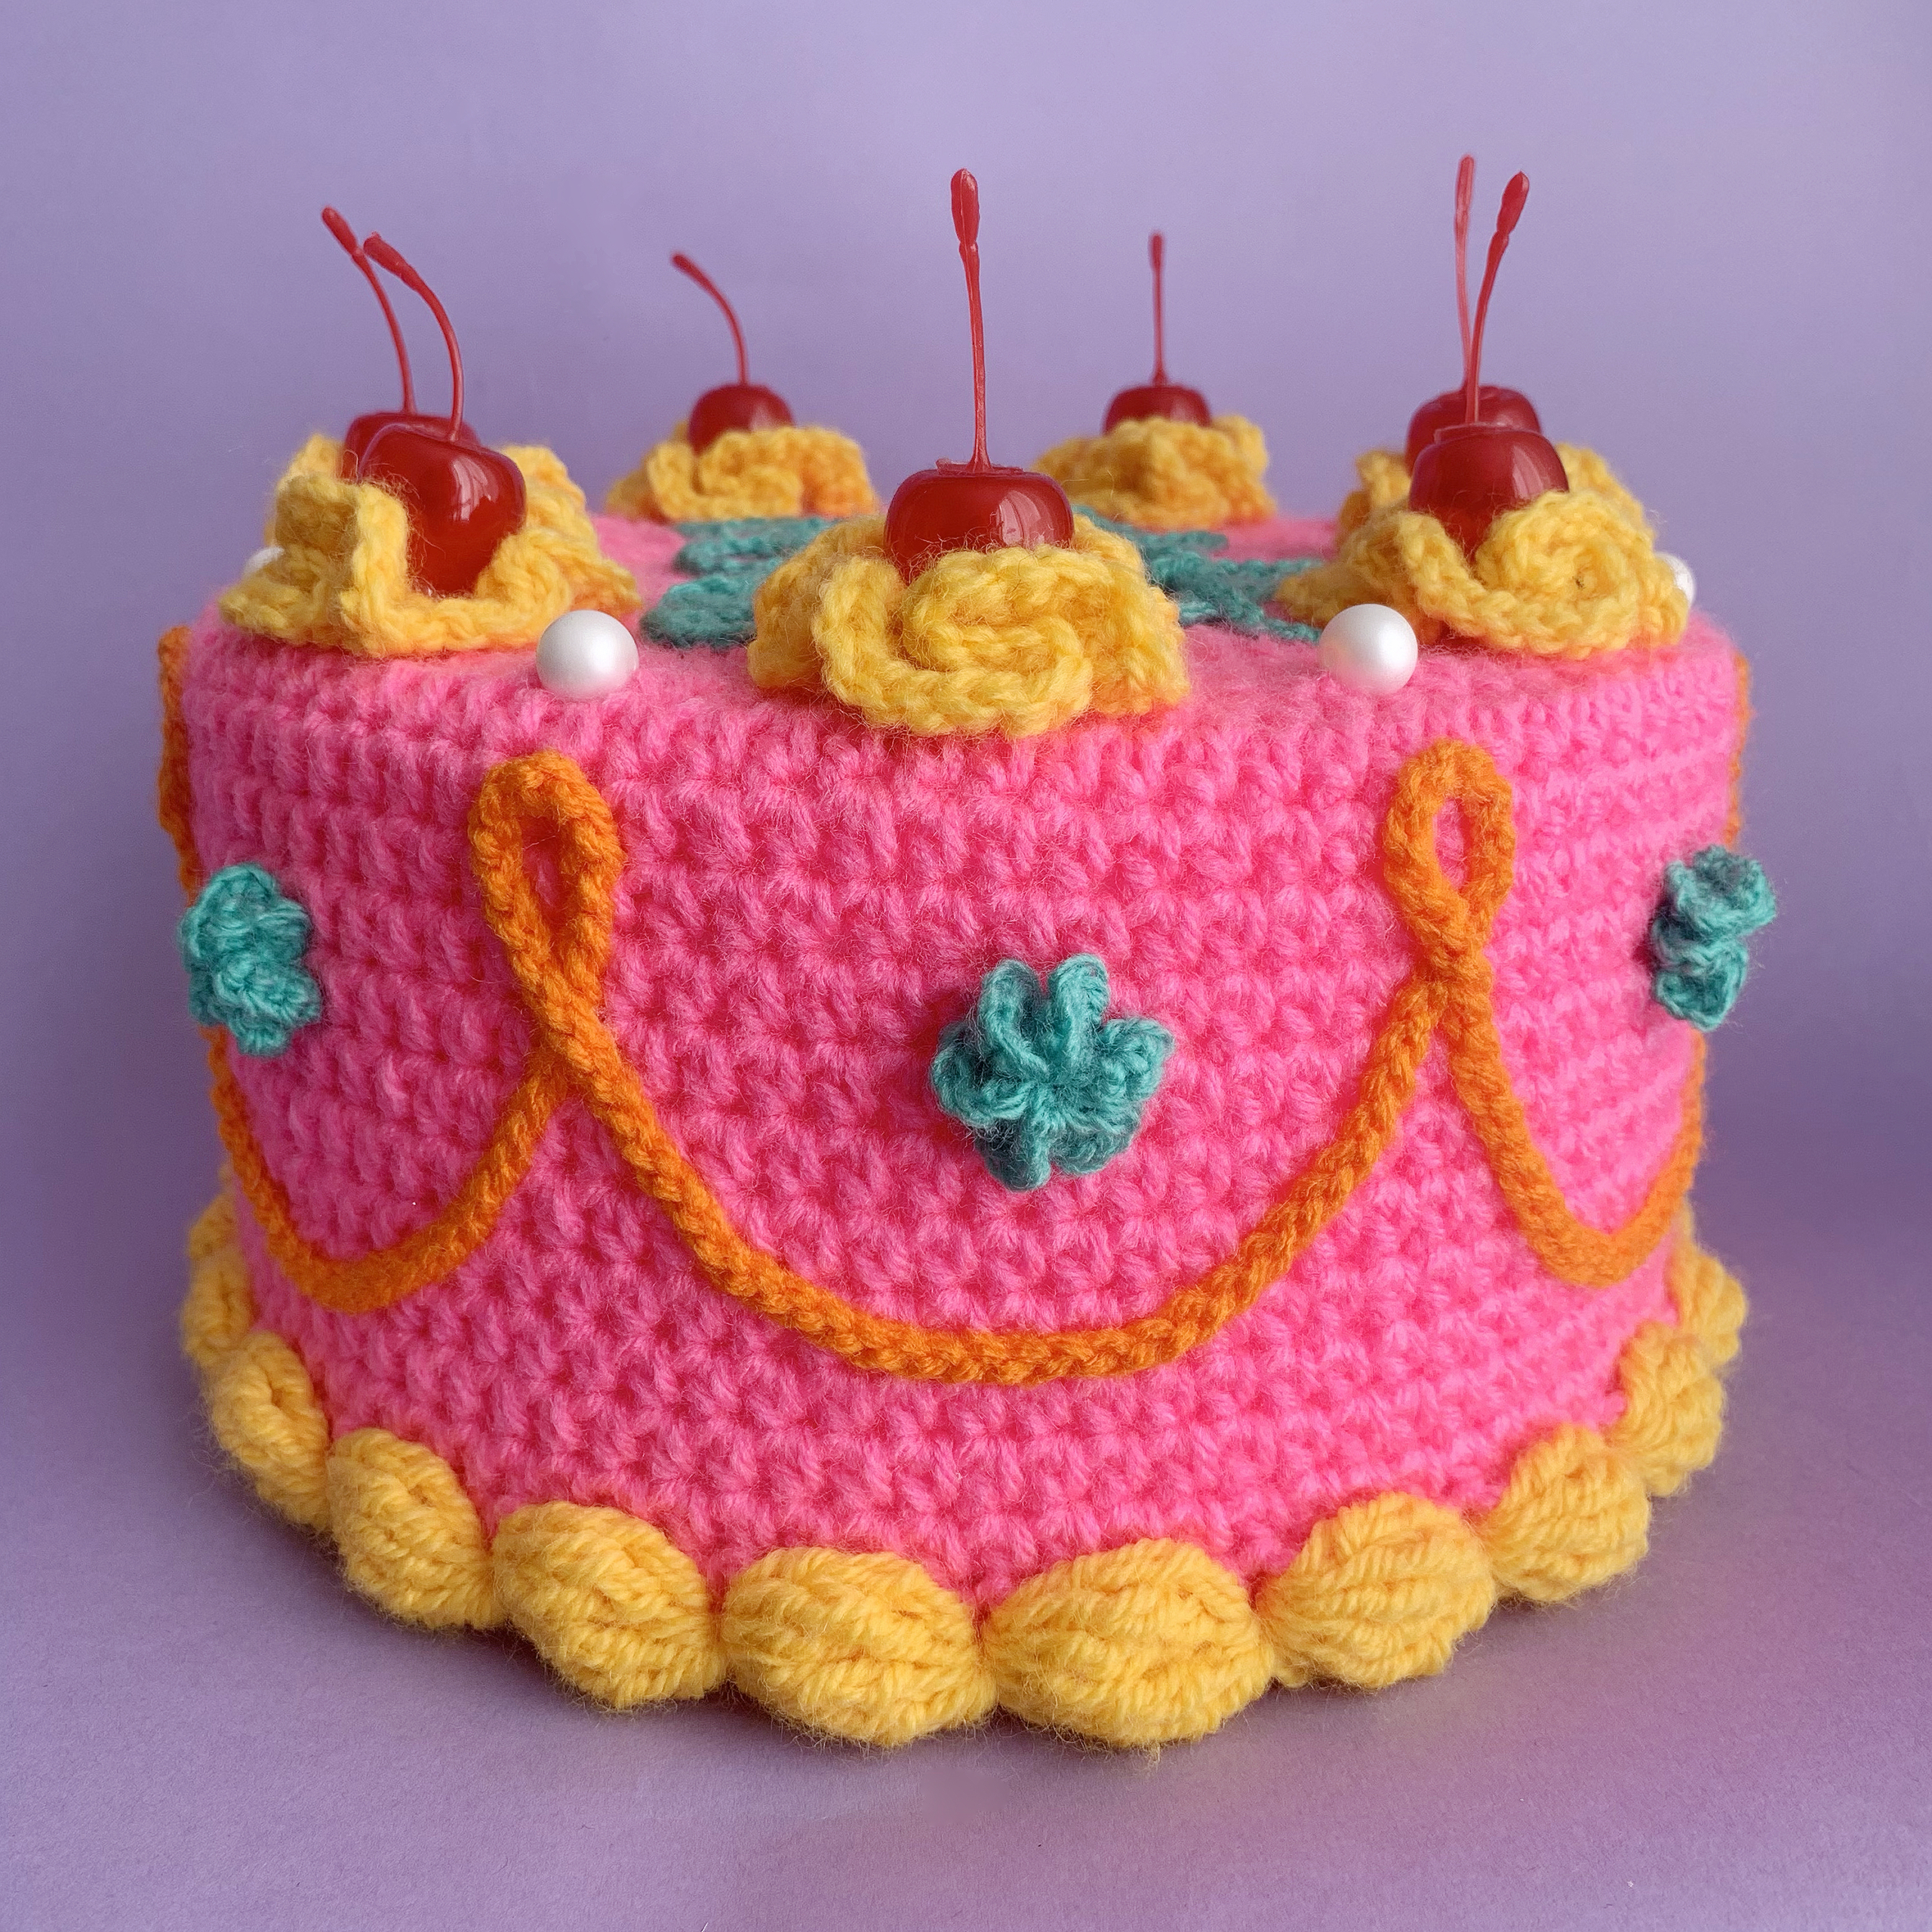 Anniversary Rose Cake free crochet cake pattern ⋆ Crochet Kingdom